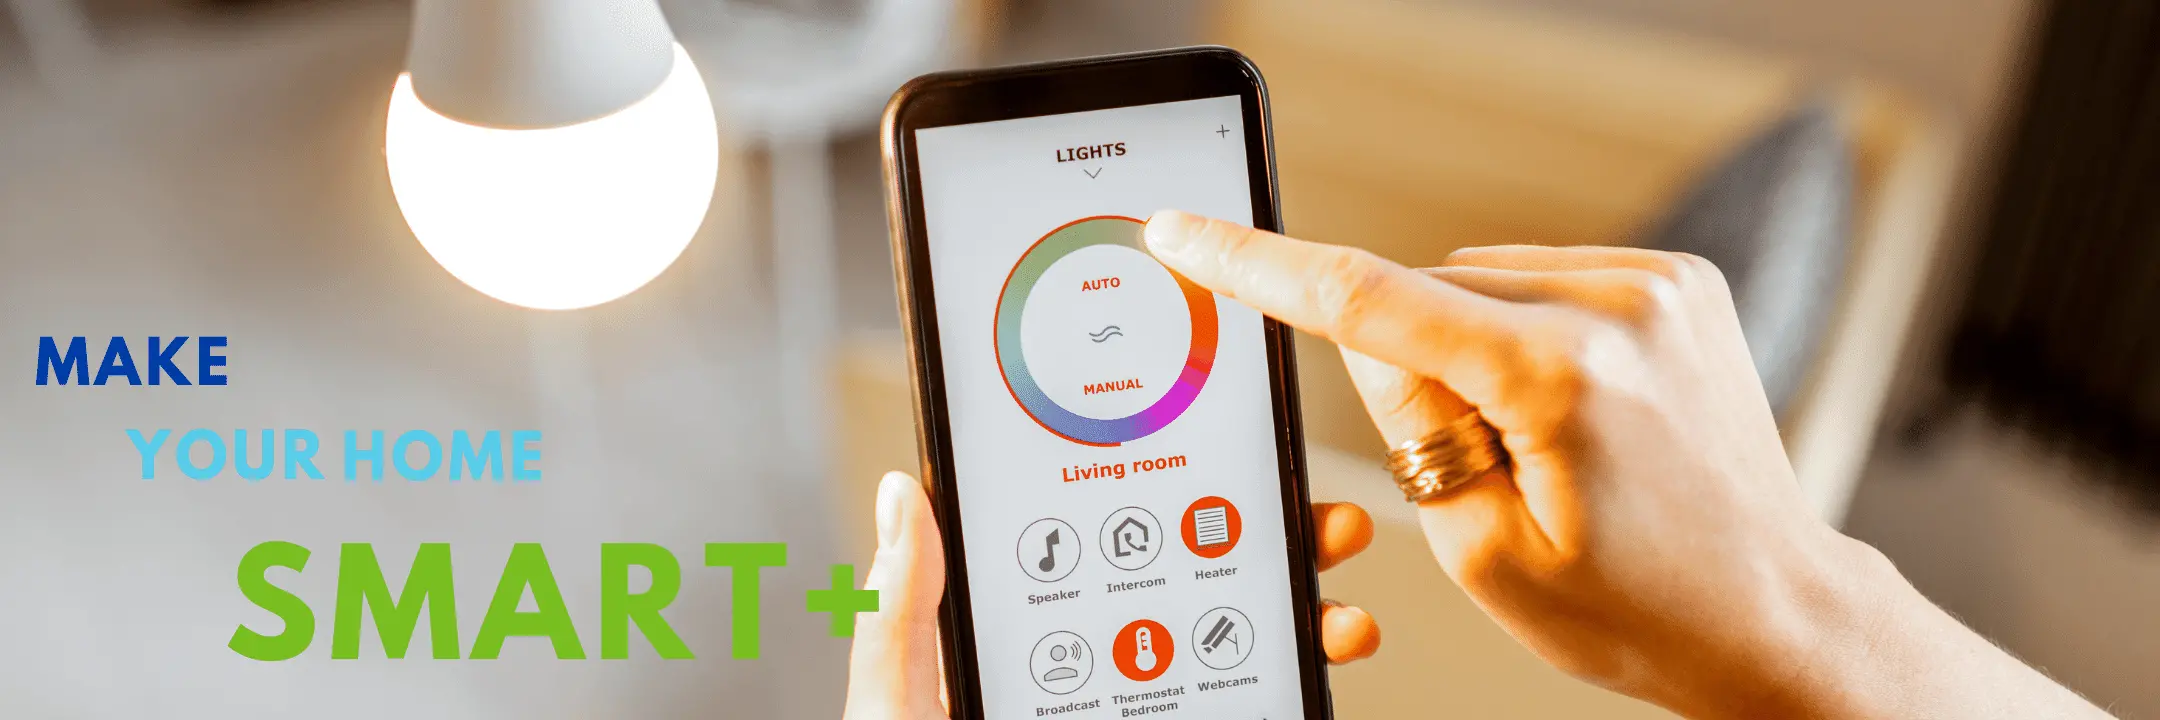 Make you home smart + led smart bulb